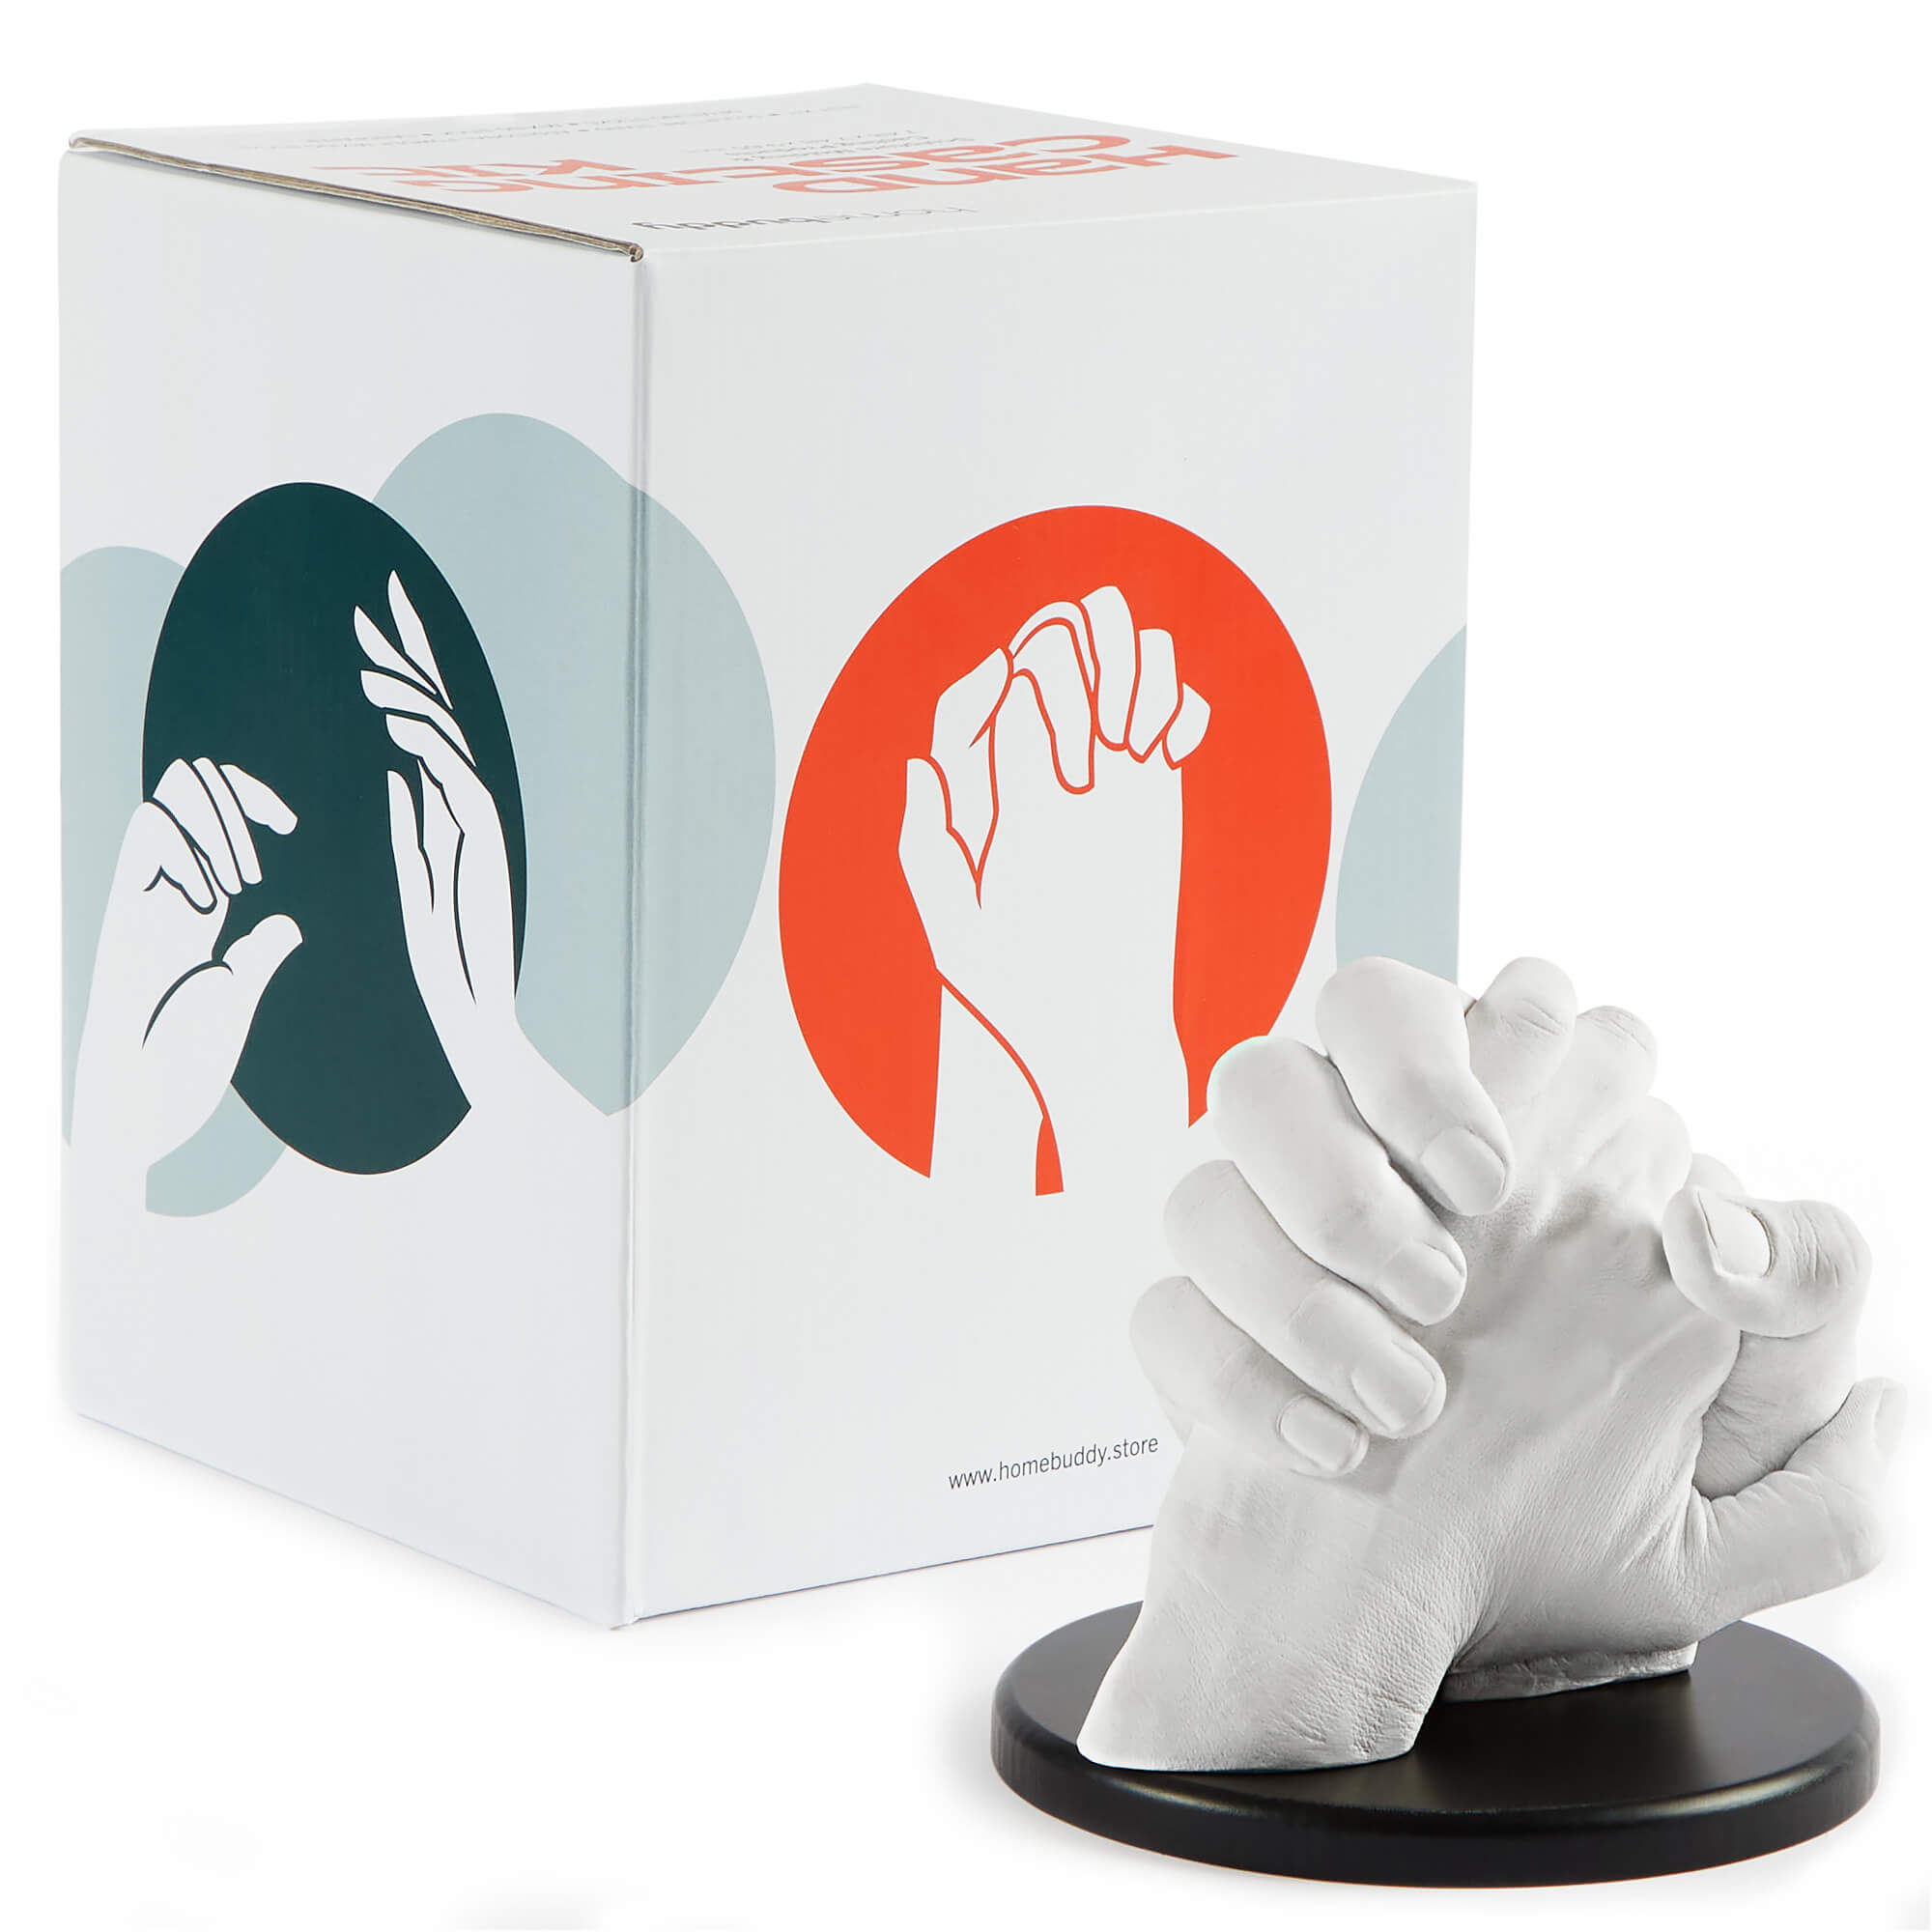 HomeBuddy Hand Casting Kit with Practice Kit - Keepsake Hand Mold Kit Couples, Plaster Hand Mold Casting Kit, Clay Hand Molding Kit for Family, Algina